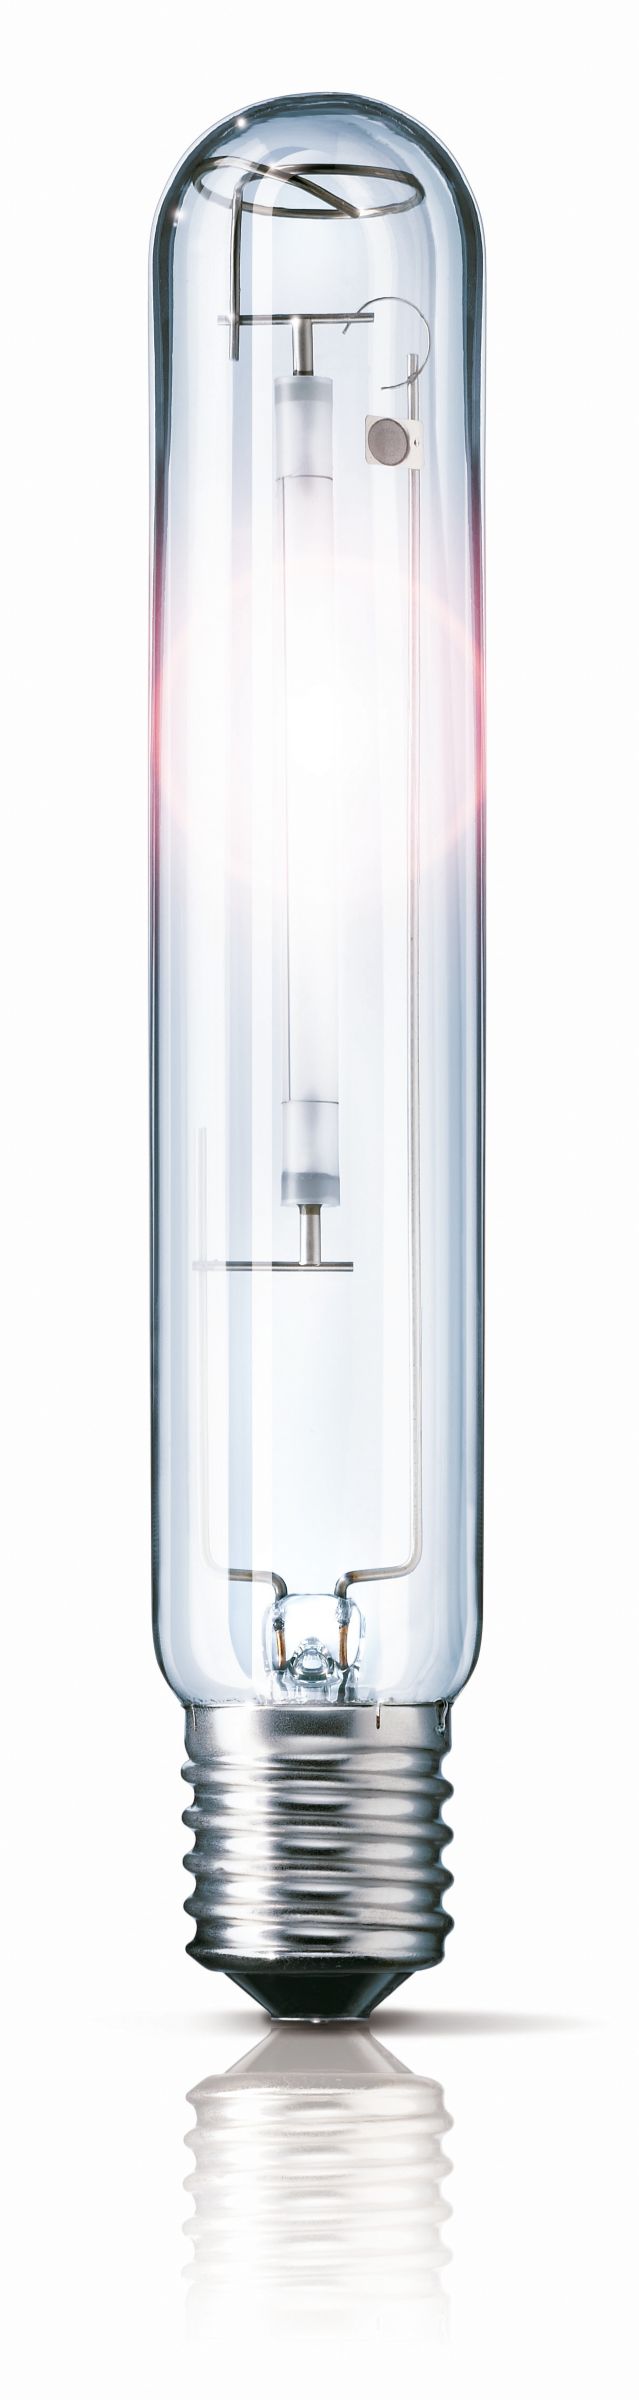 600 W Philips MASTER SON-T PIA PLUS LAMPE-Hydroponics Grow Light HPS 